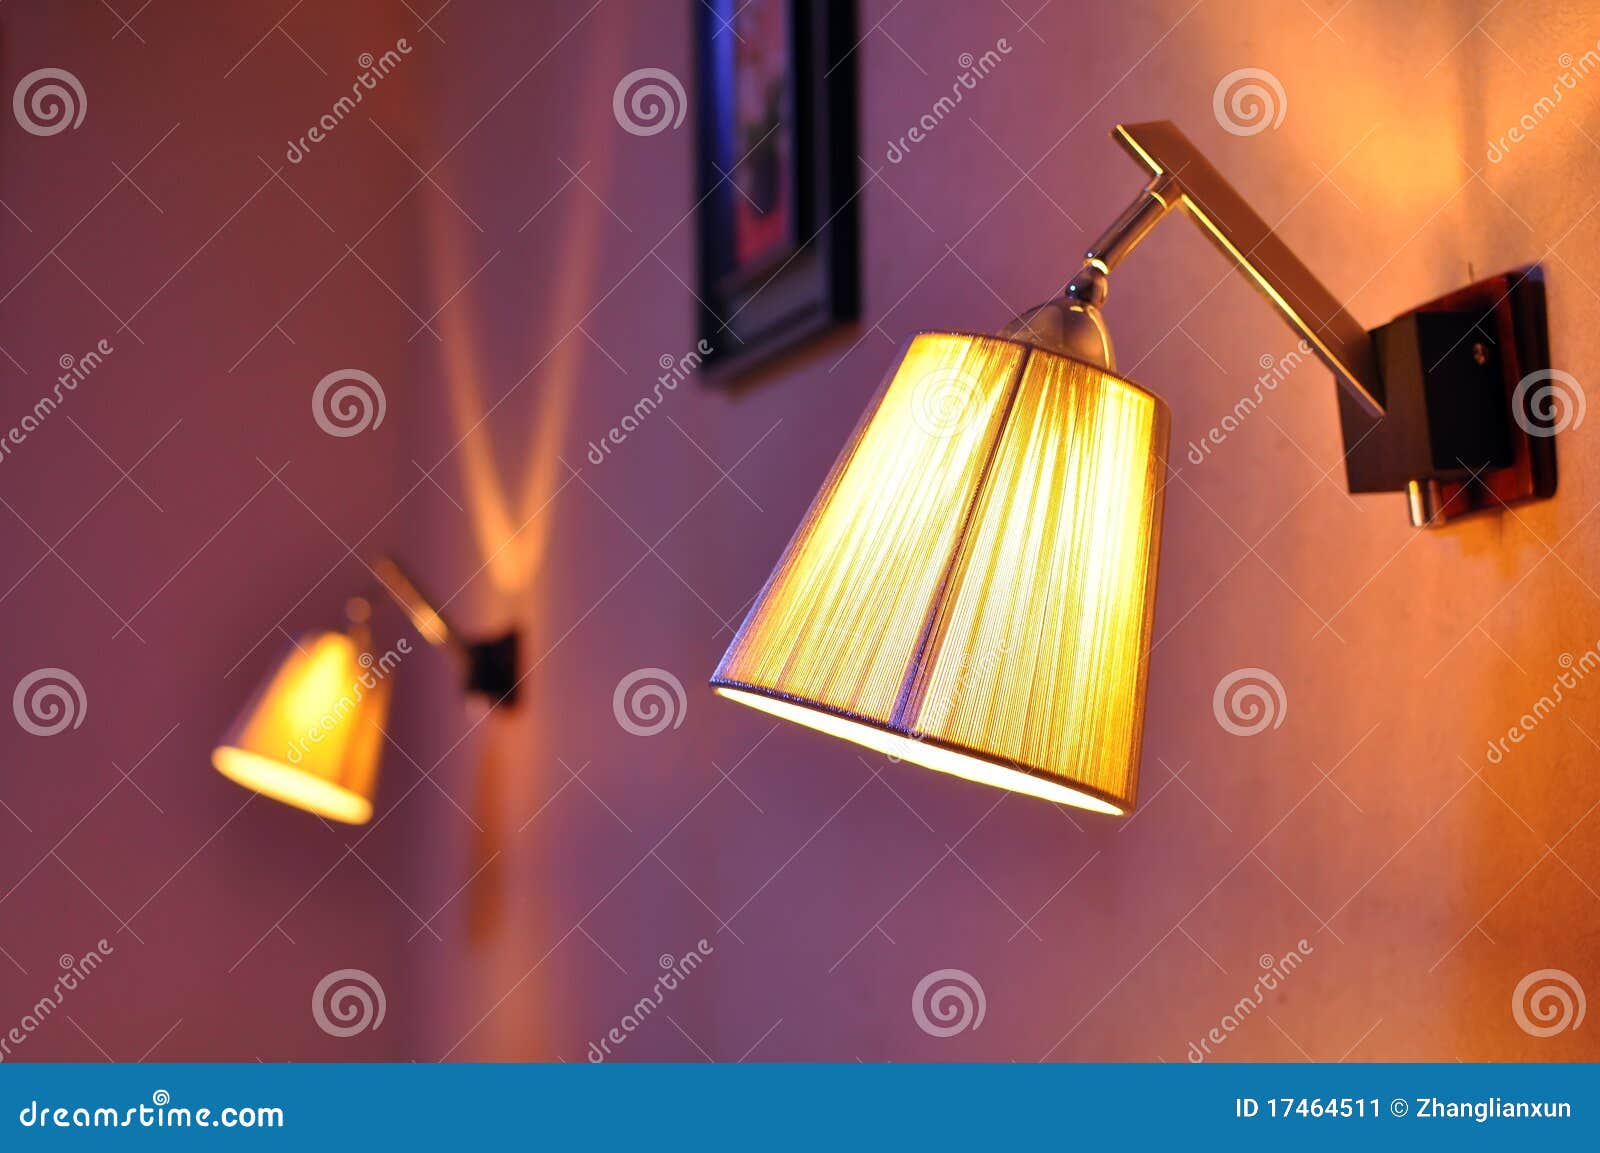 Bedside lamp stock image. Image of decorating, lights - 17464511